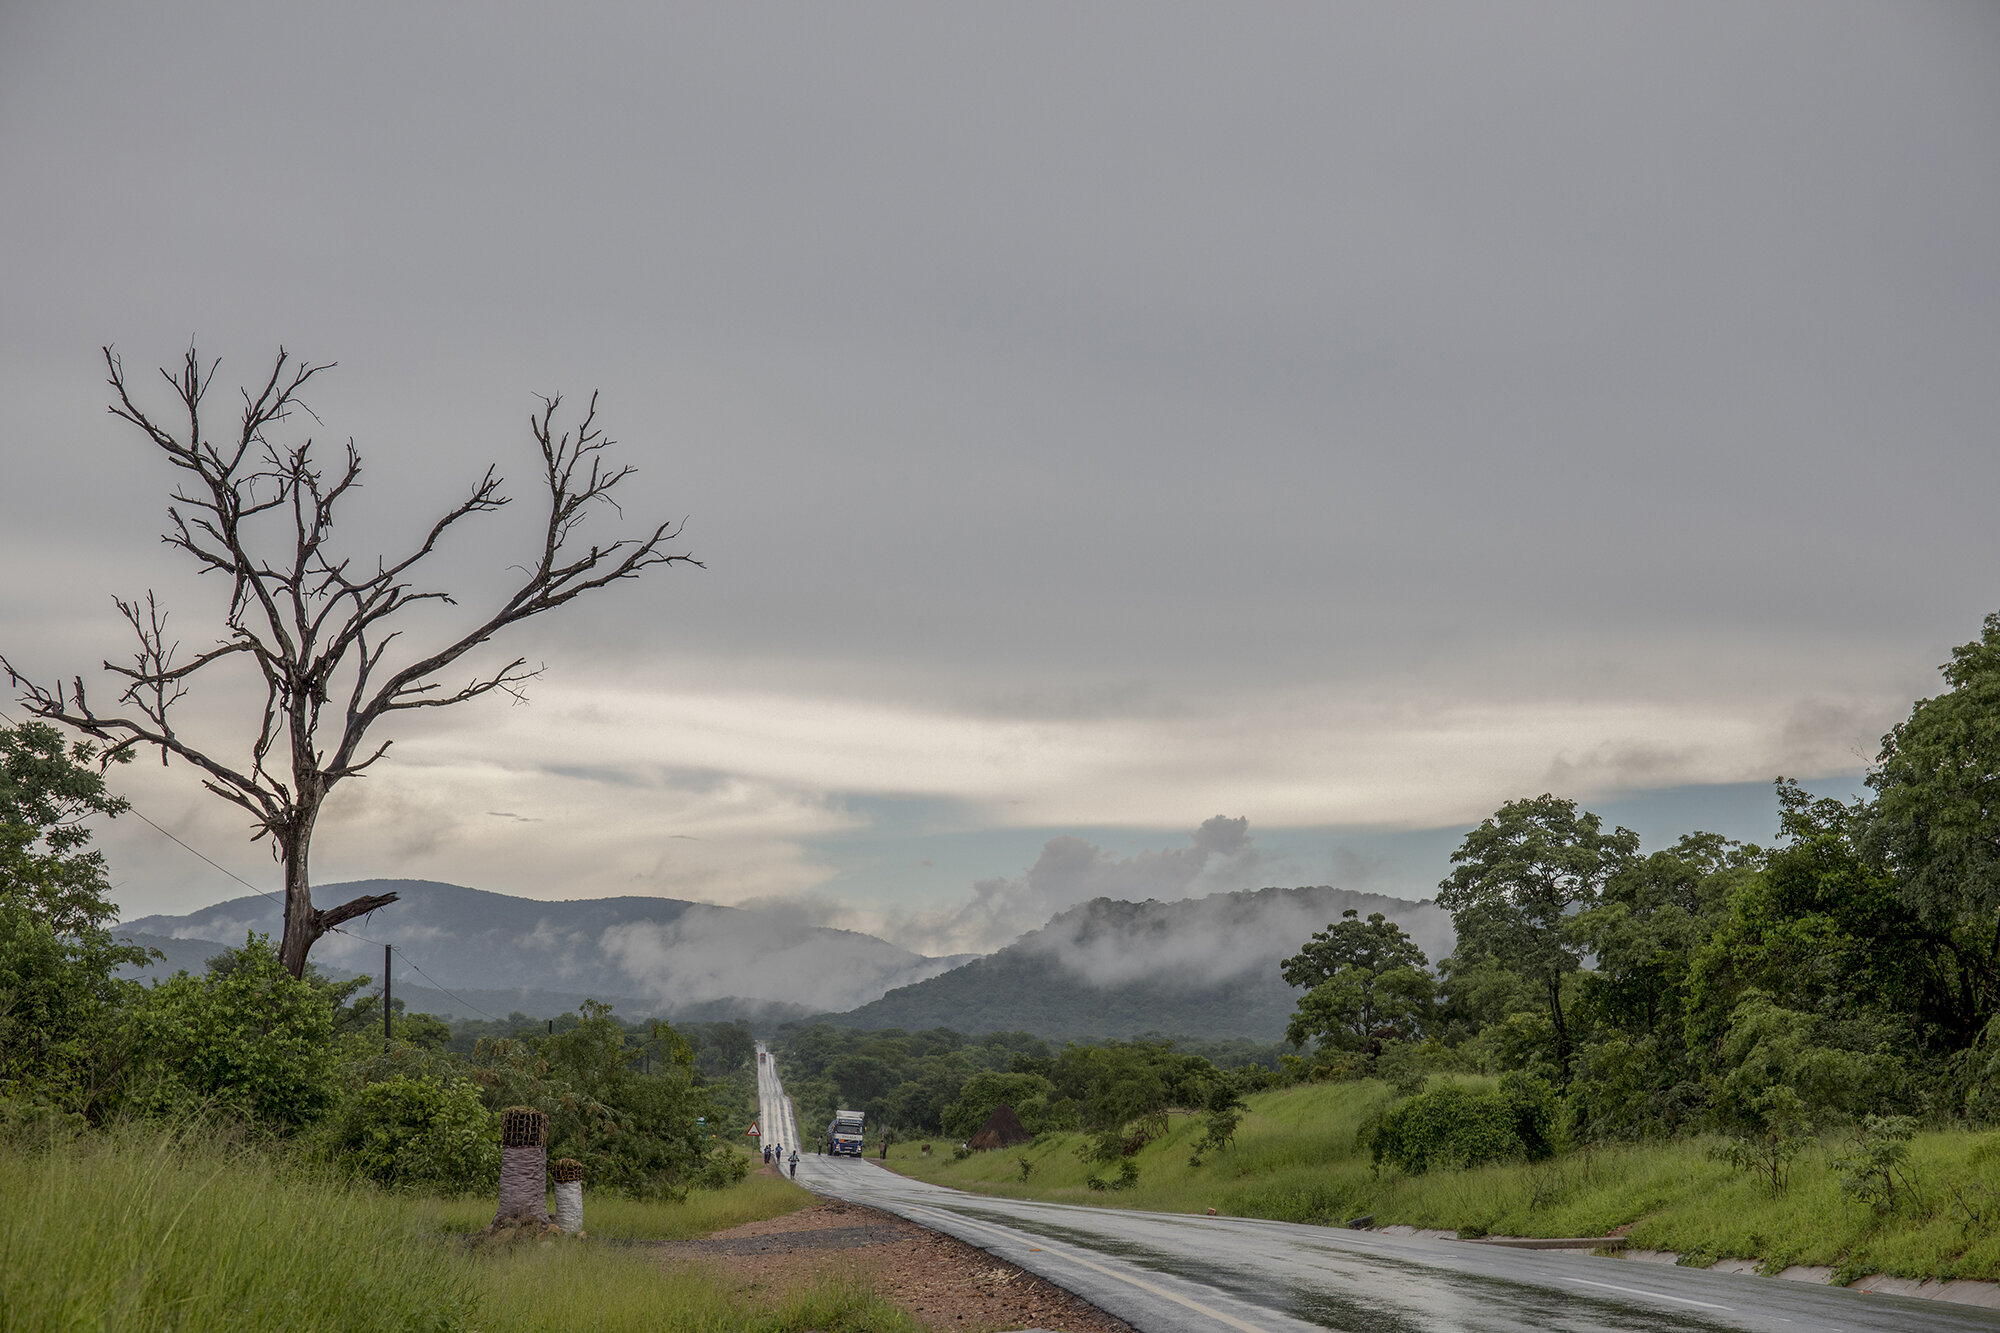  The road to Katete, Zambia, William Phiri’s rural home. 